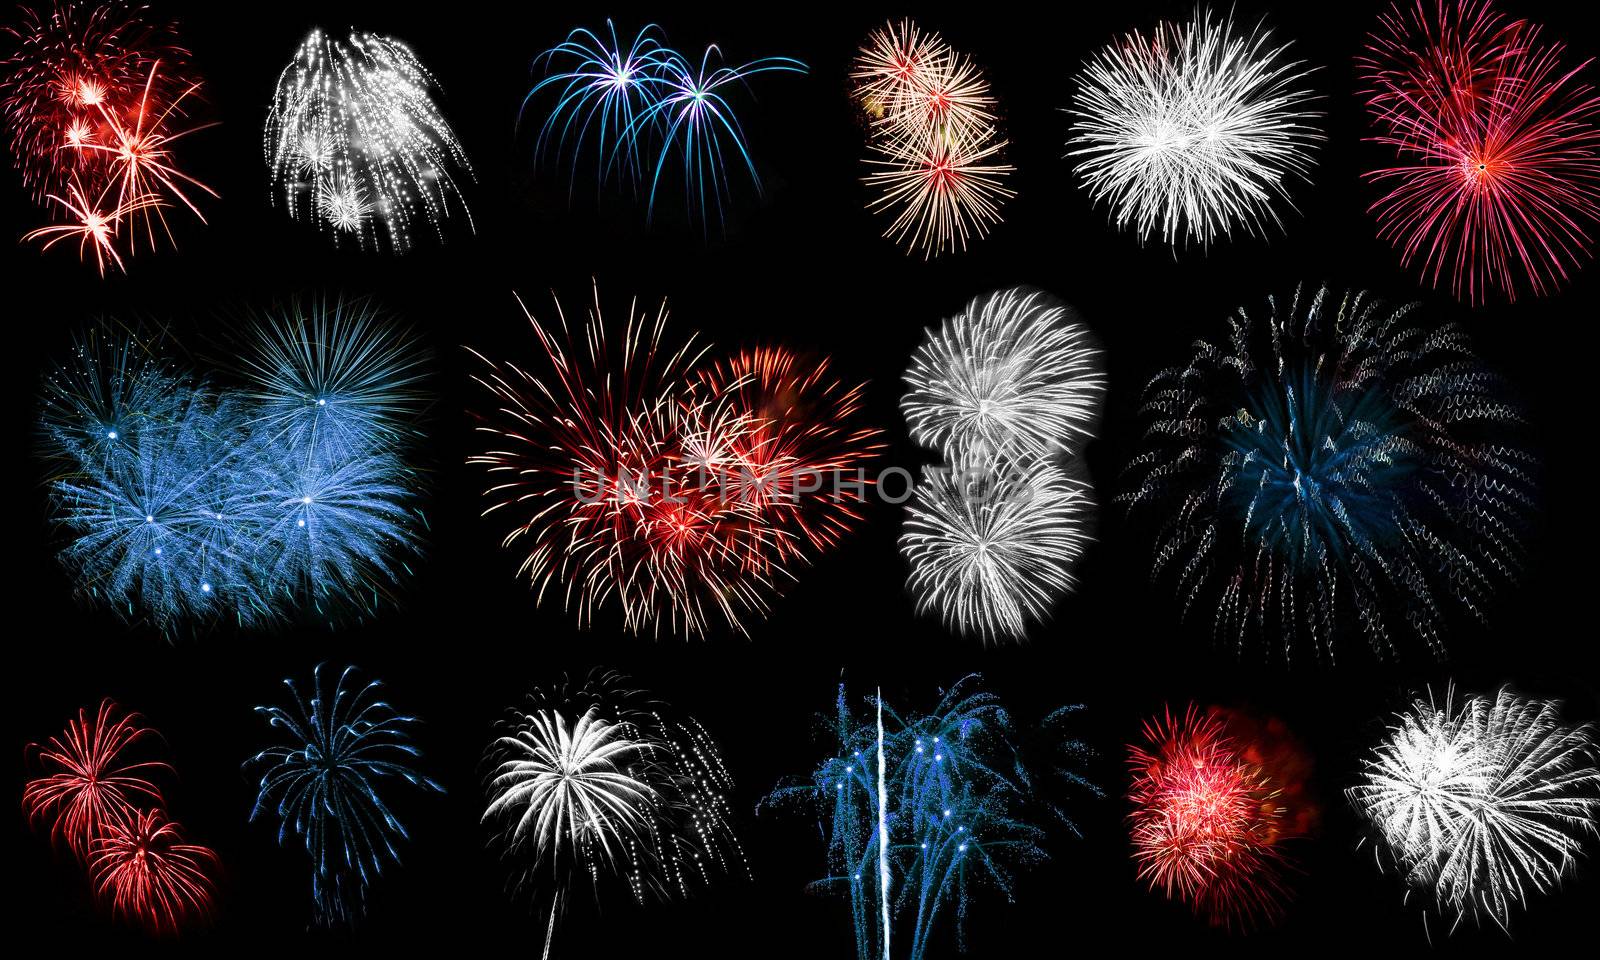 Long Exposure of Fireworks Against a Black Sky by Frankljunior